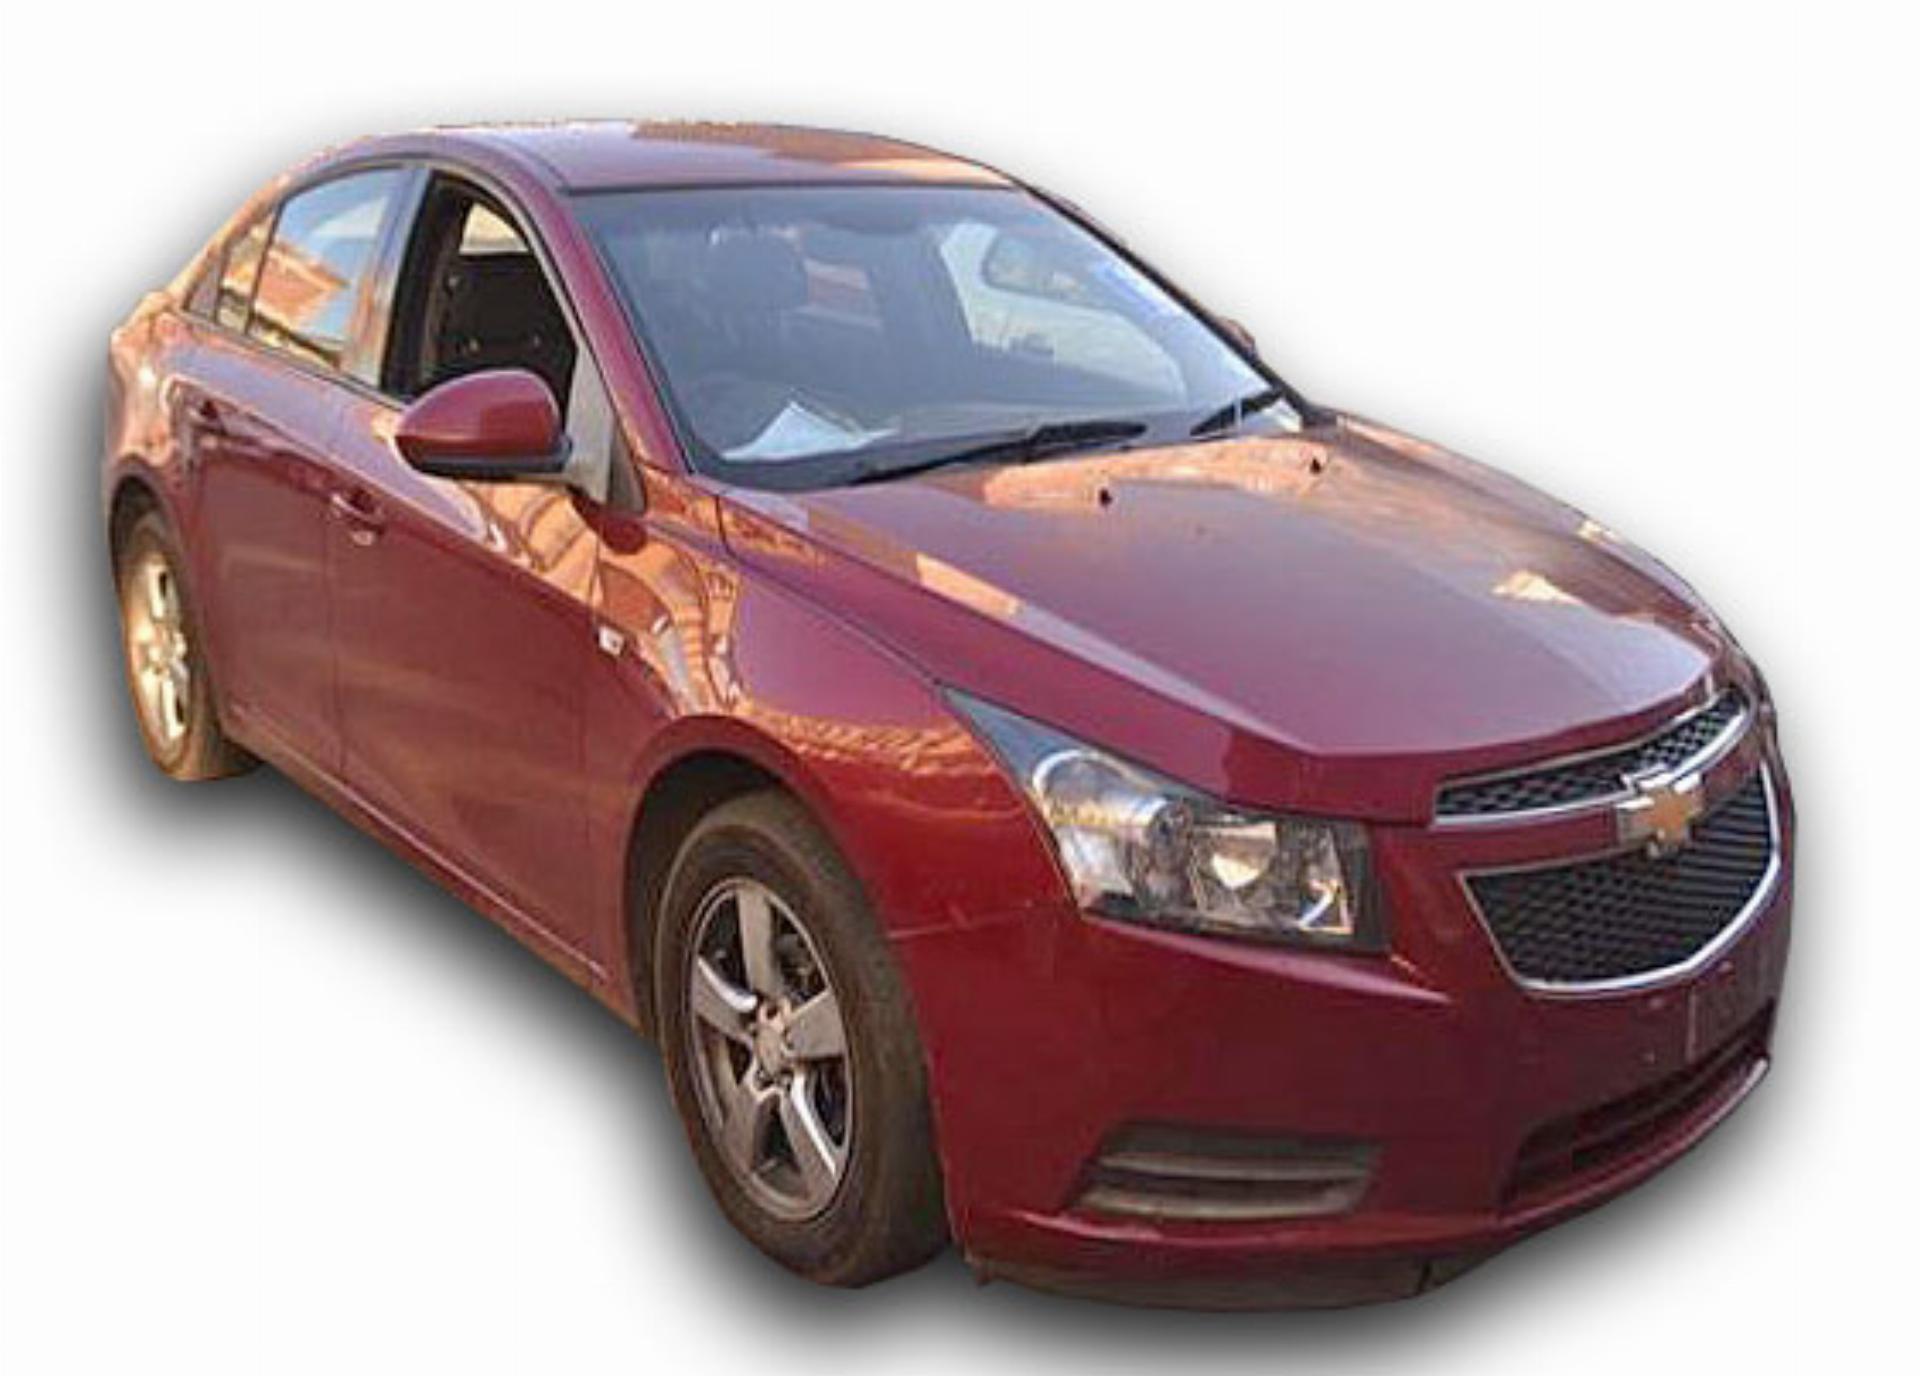 Repossessed Chevrolet Cruze 1.6L 2012 on auction MC44151